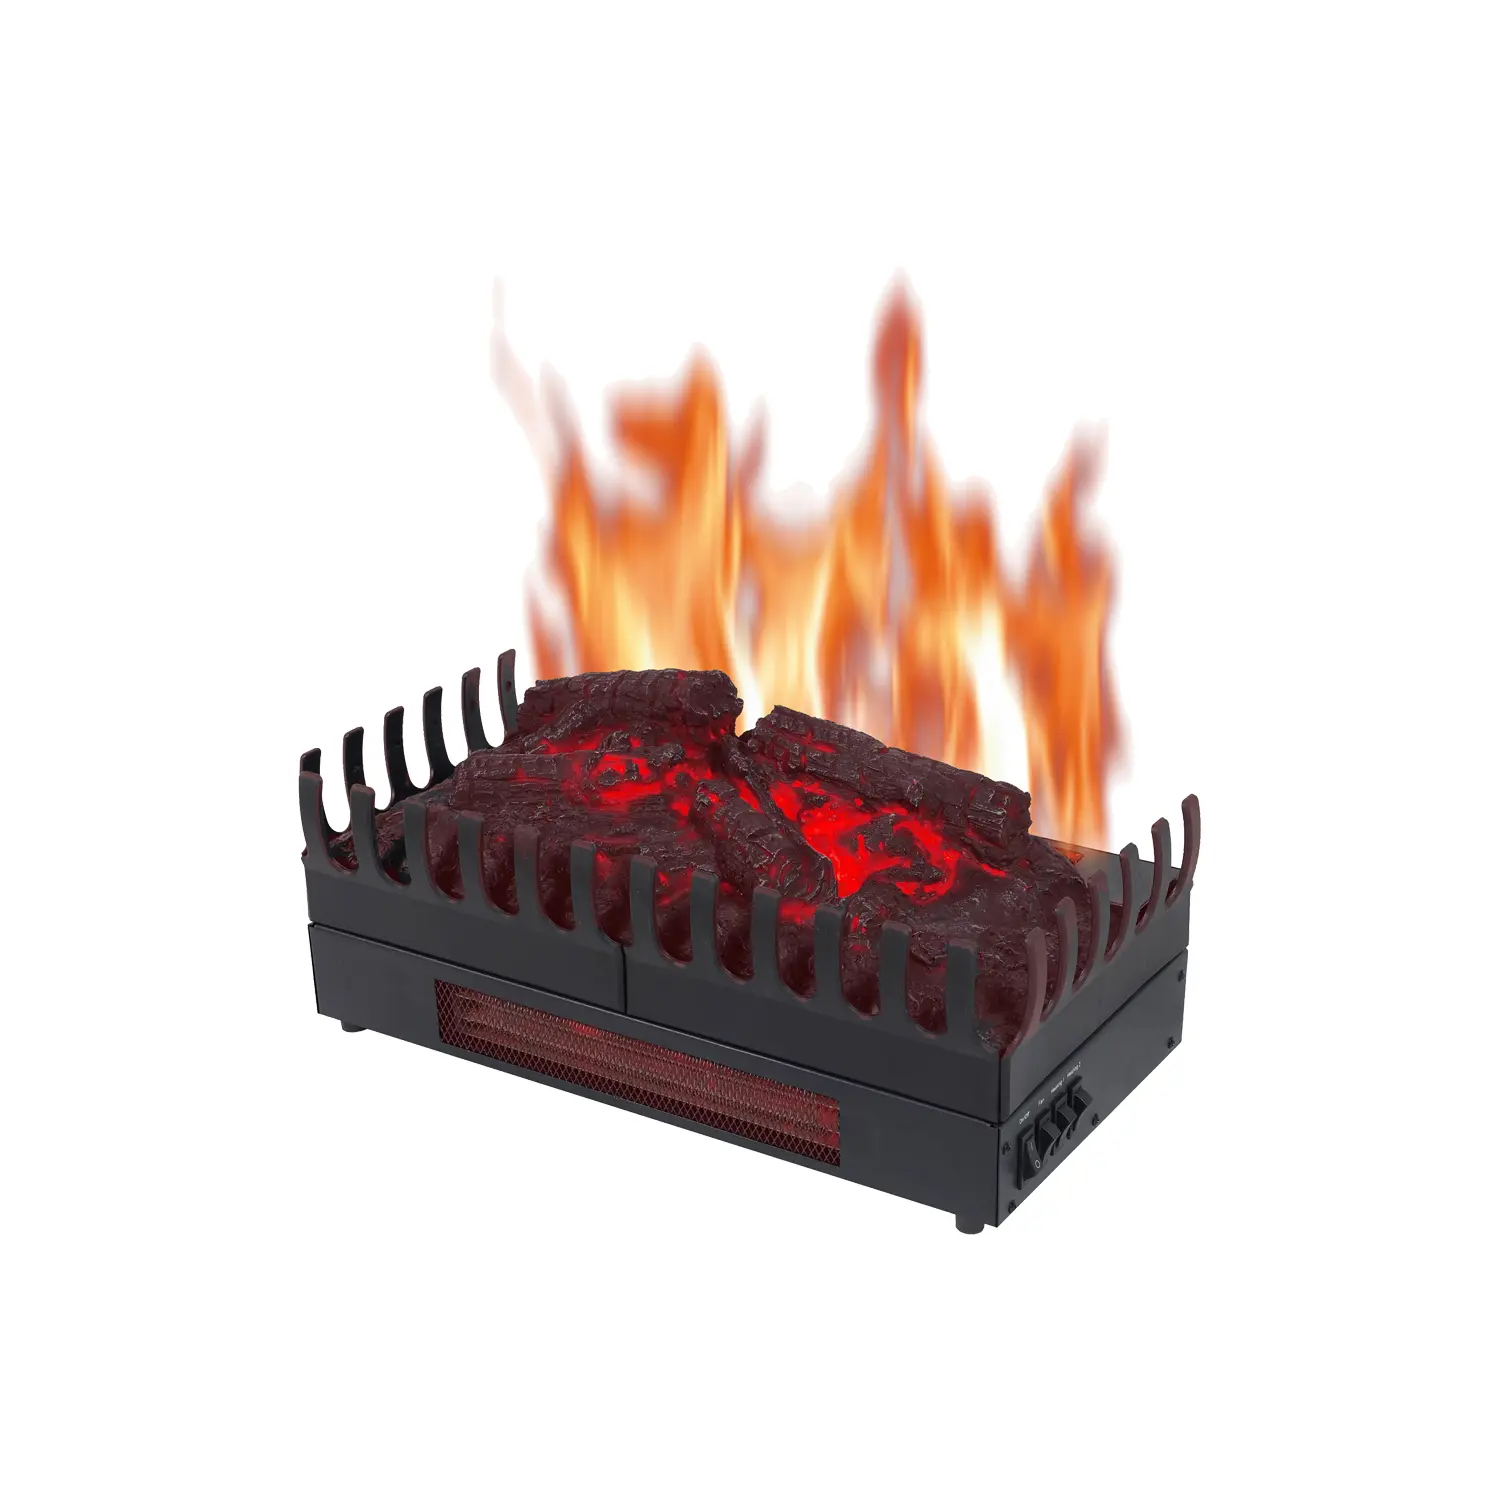 Foyer à buches avec effet flammes et chauffage 2000W